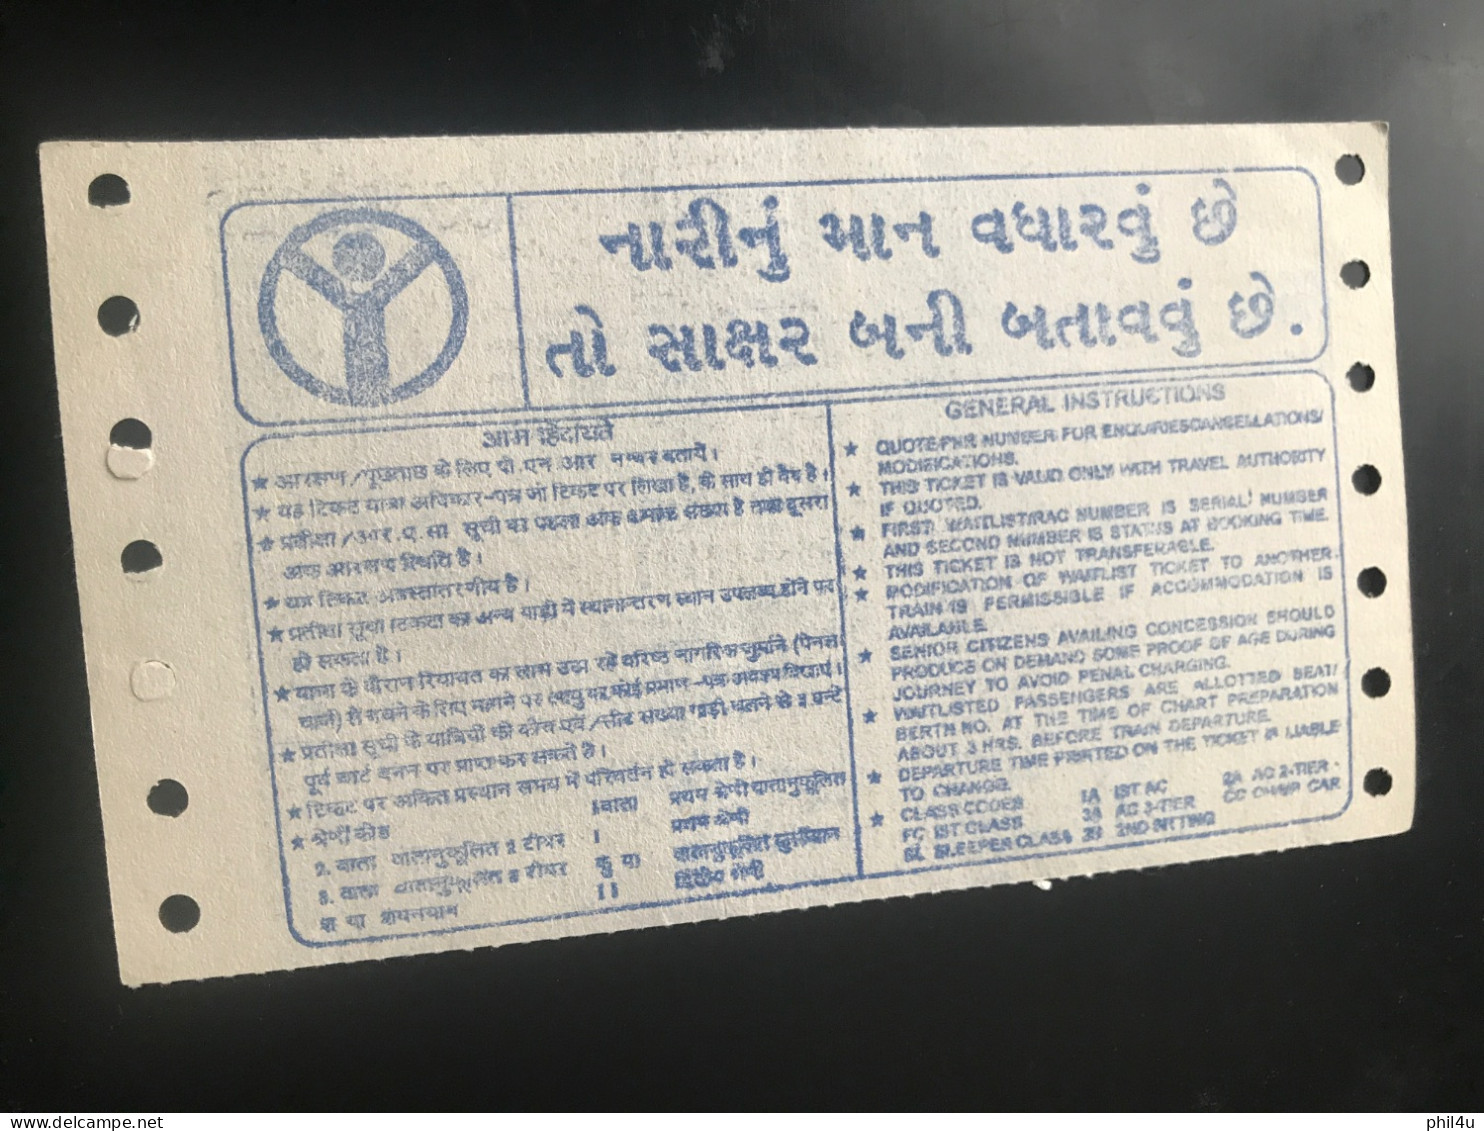 Old 2 Indian Railway Cancellation Tickets See Photos - Ferrovie